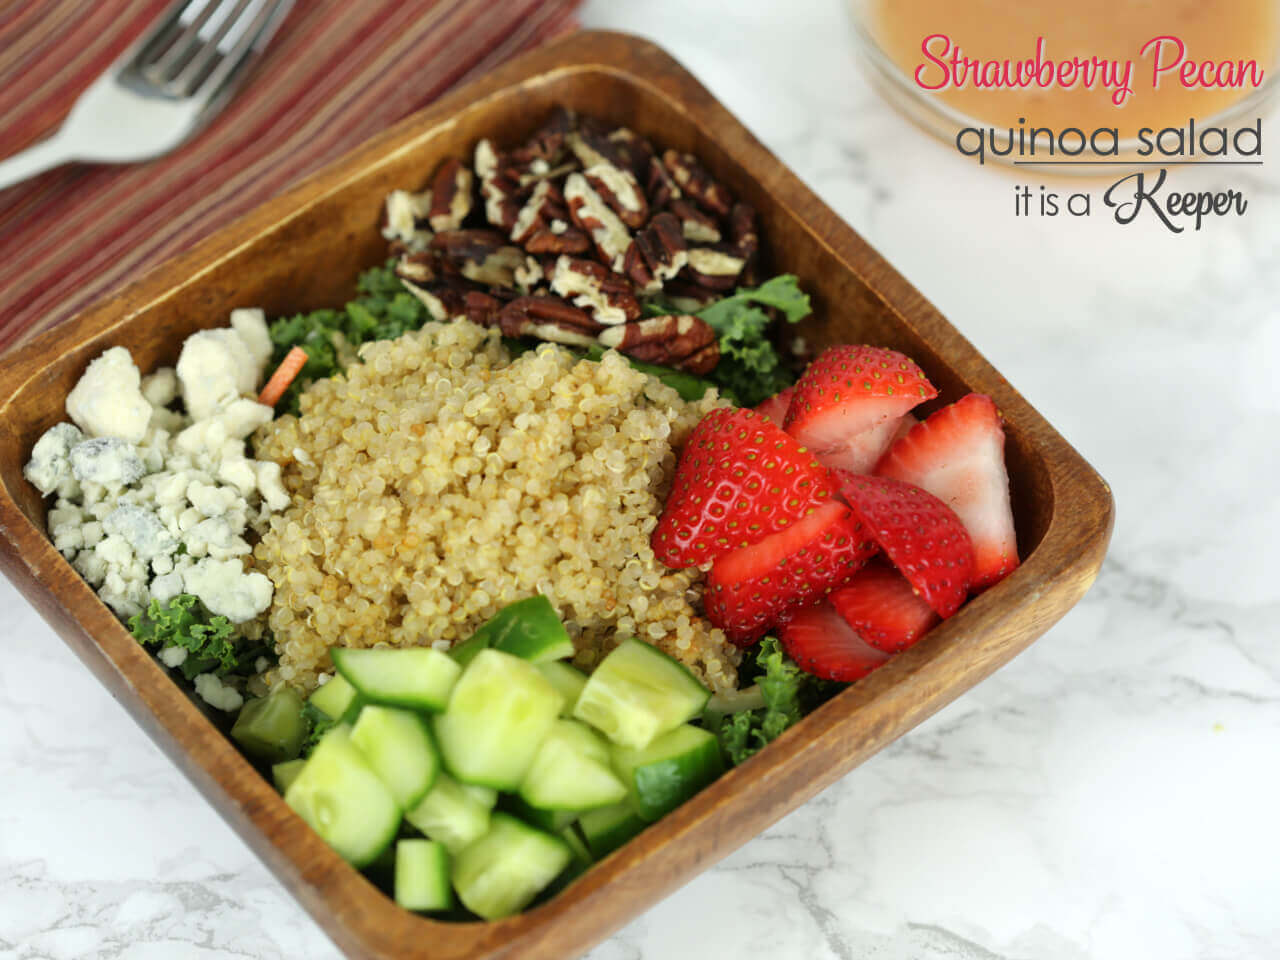 Strawberry Pecan Quinoa Salad - I'm addicted to this scrumptious and health salad 